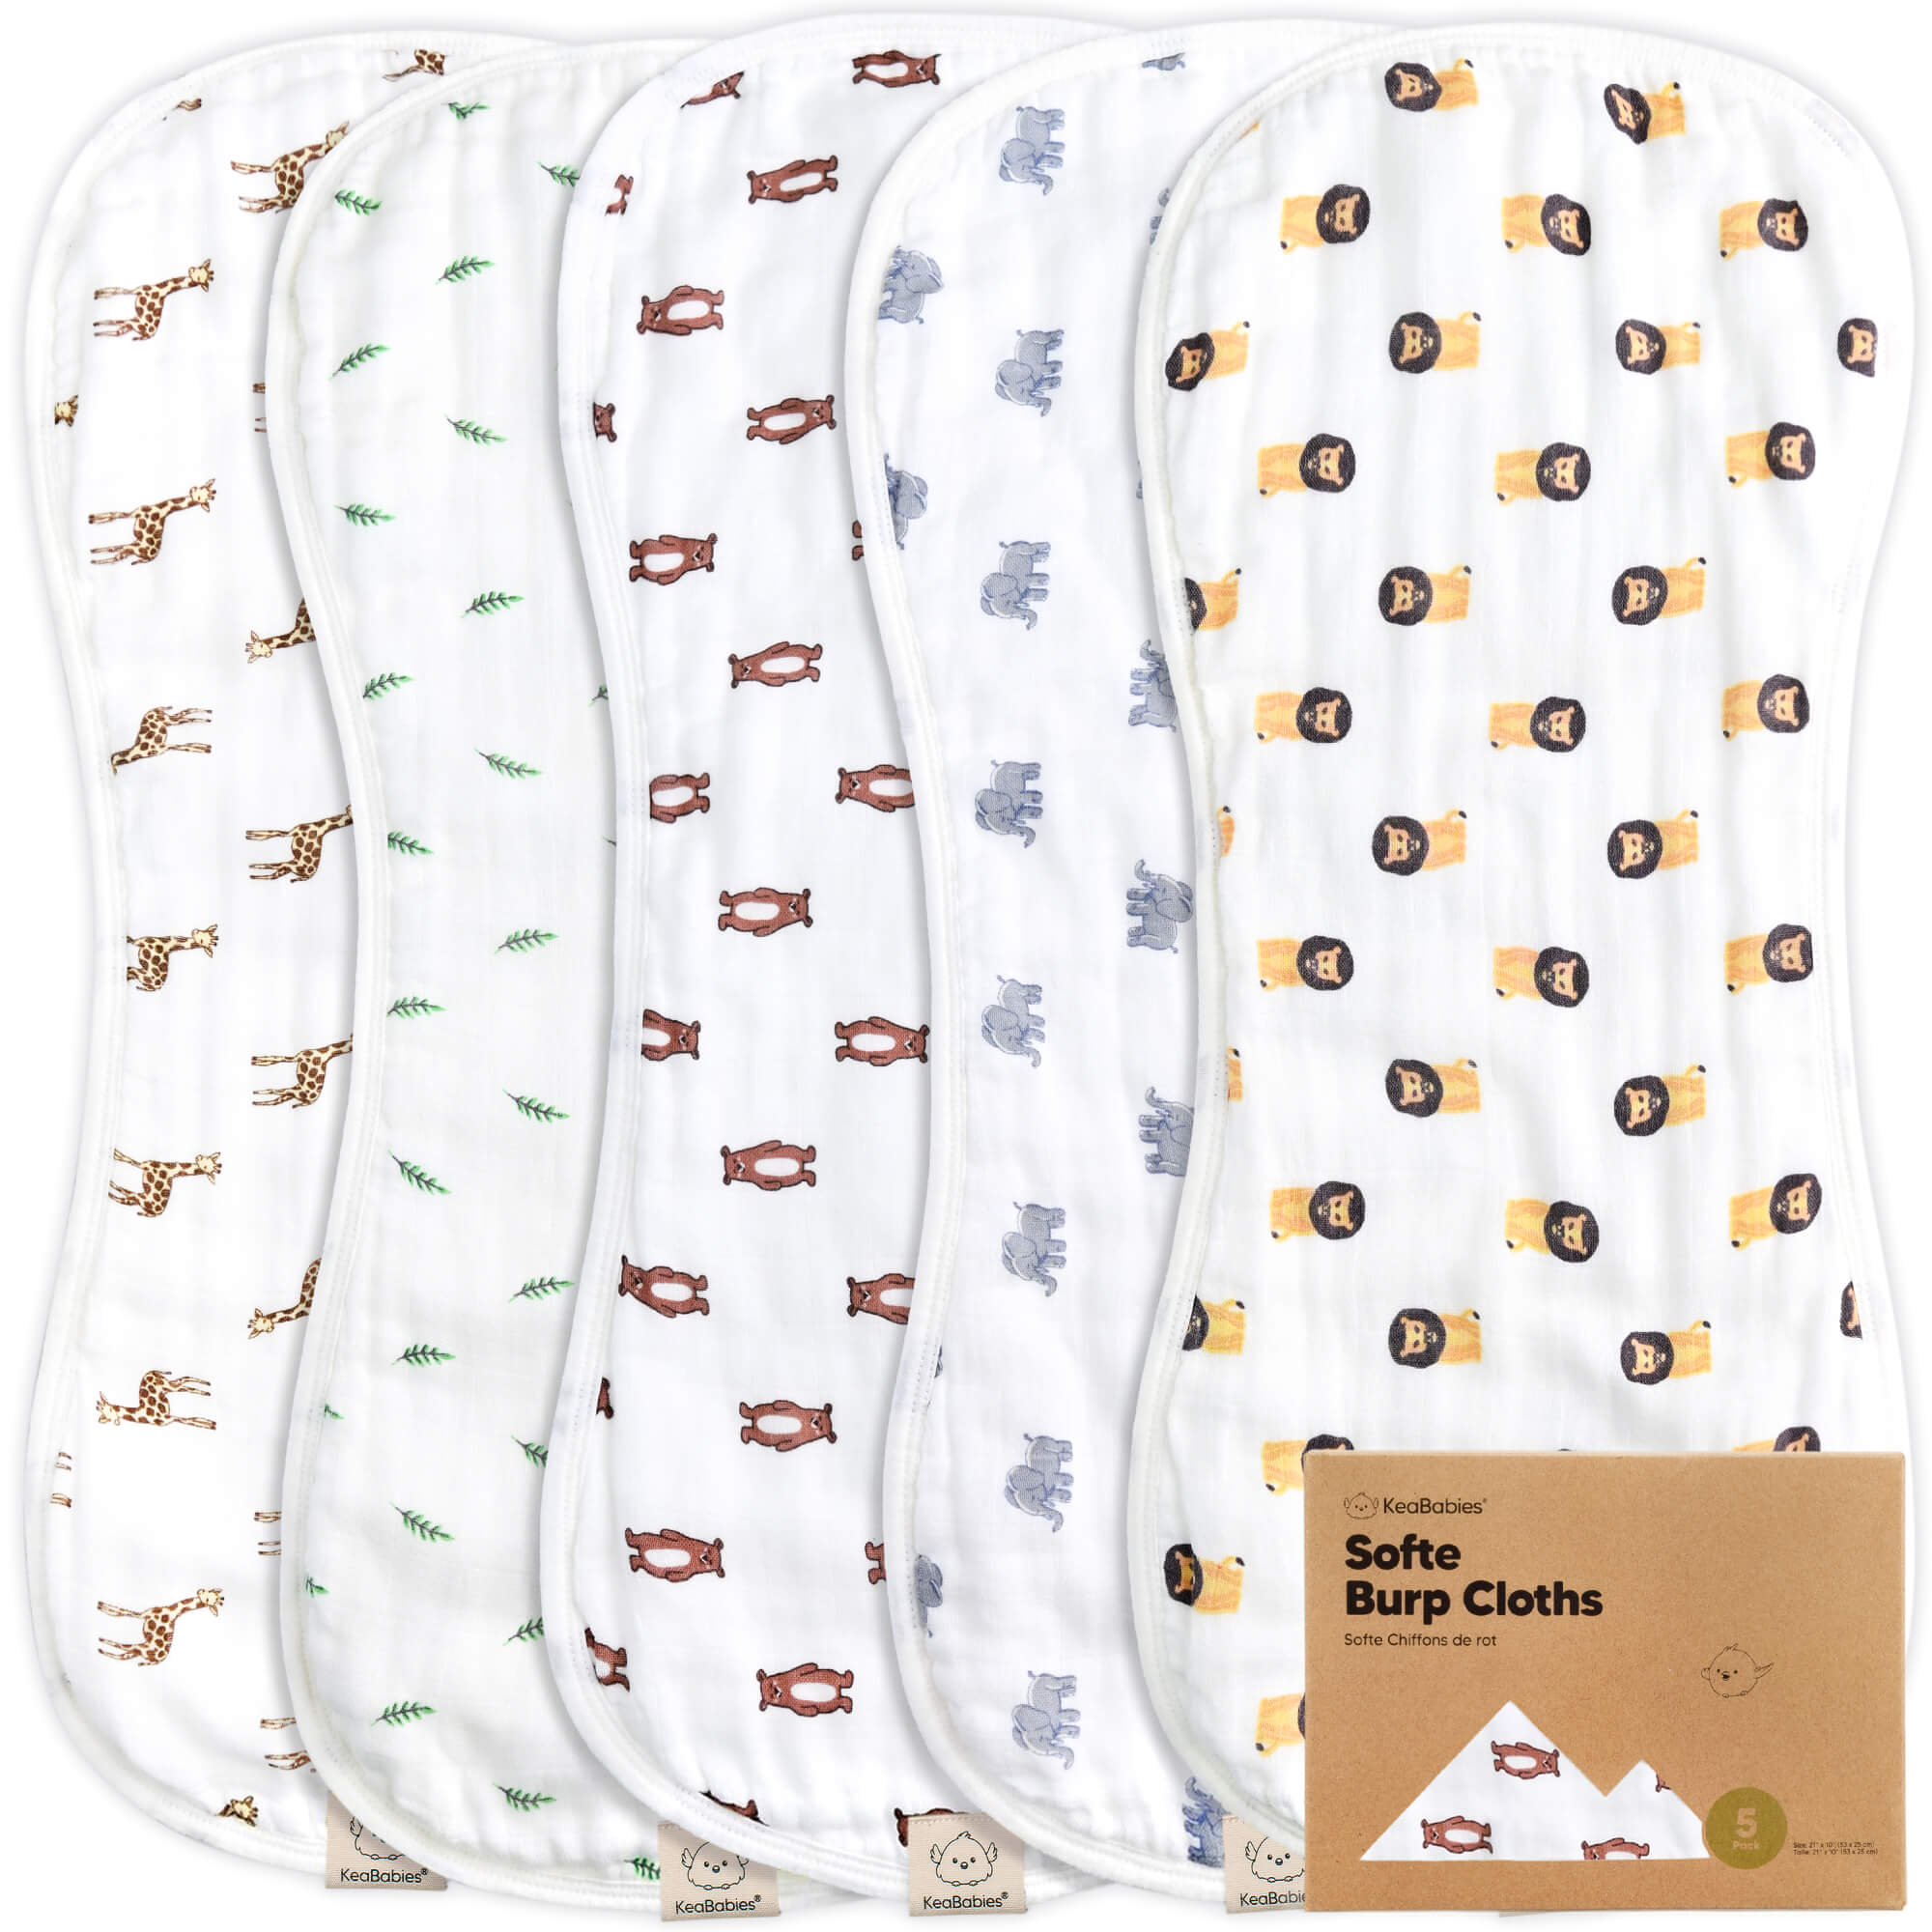 Luxurious 6-Layer Muslin Baby Burp Cloths - Super Absorbent Cotton - Zoo  Pattern